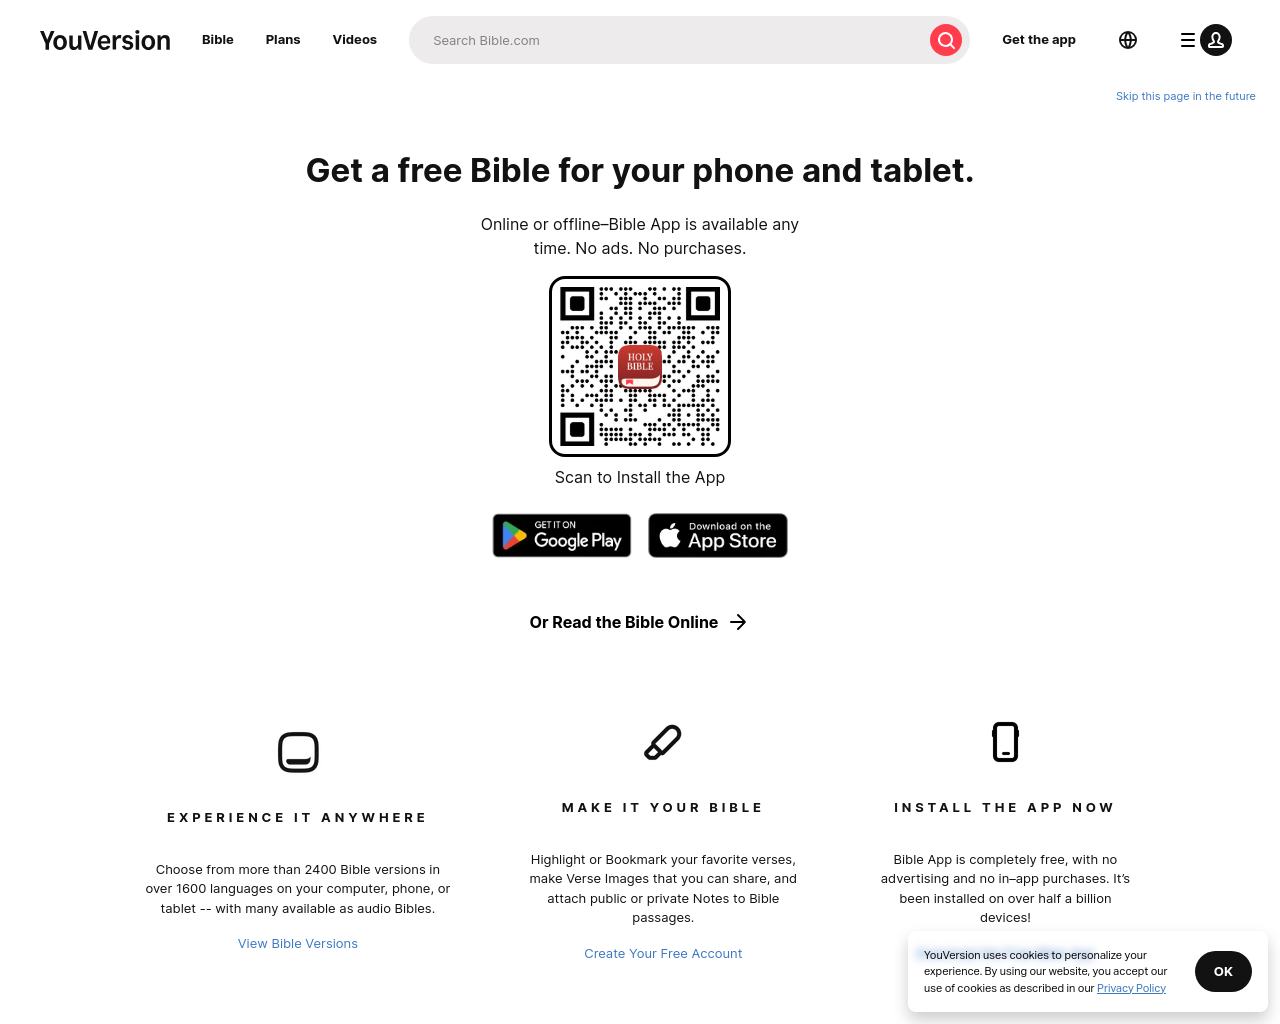 bible.com